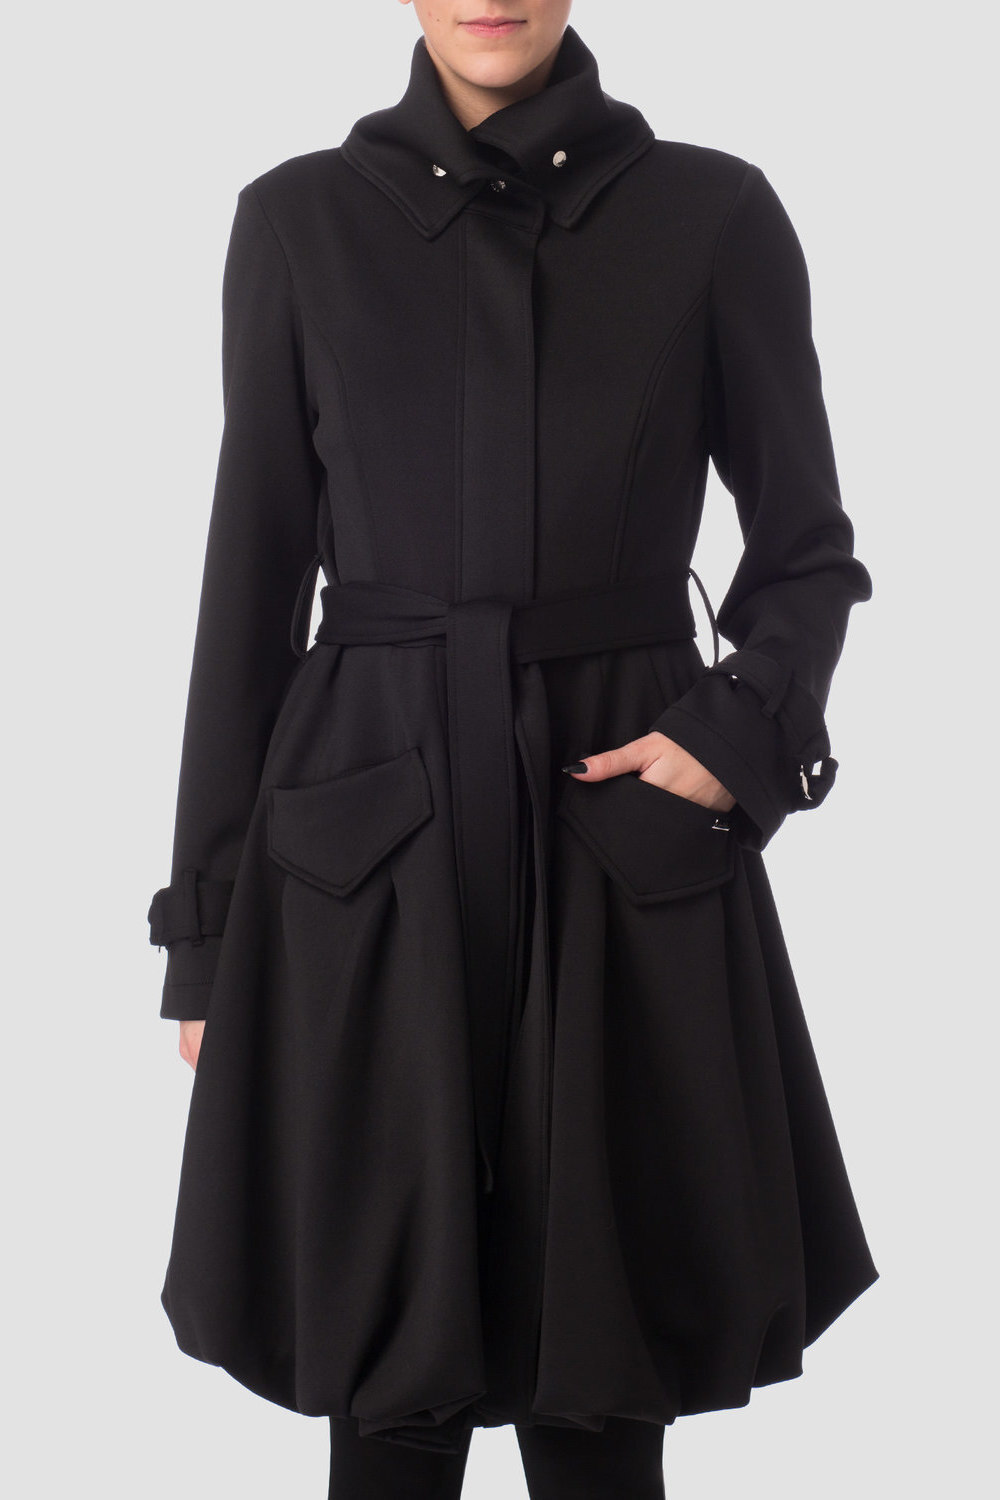 Joseph Ribkoff coat style 173327. Black